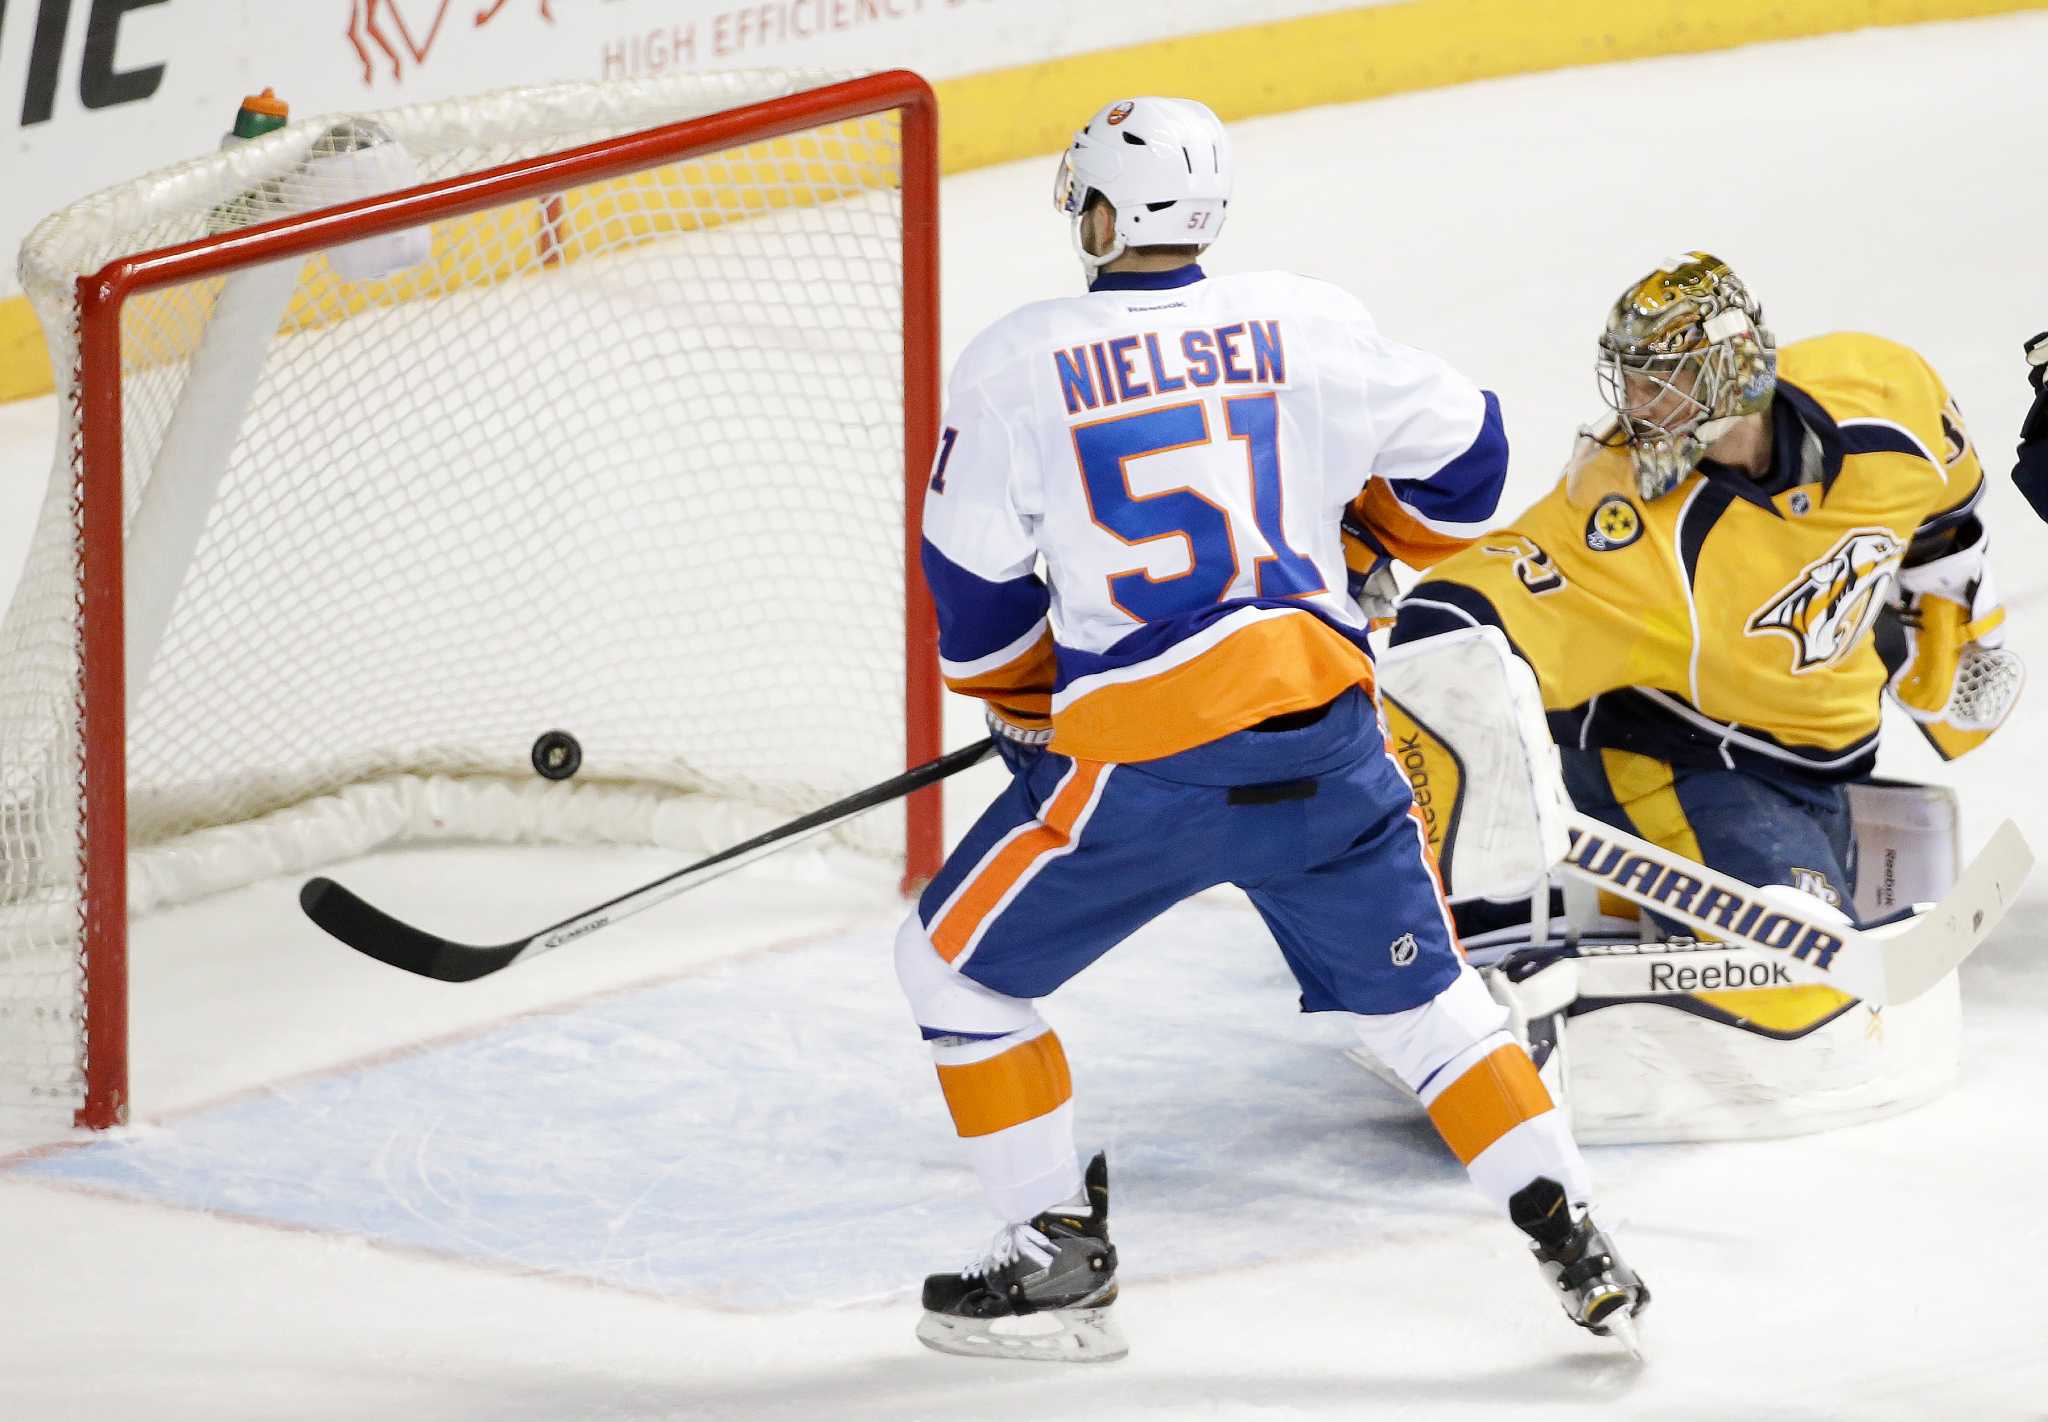 Nashville Predators goalie Pekka Rinne scores to help seal victory